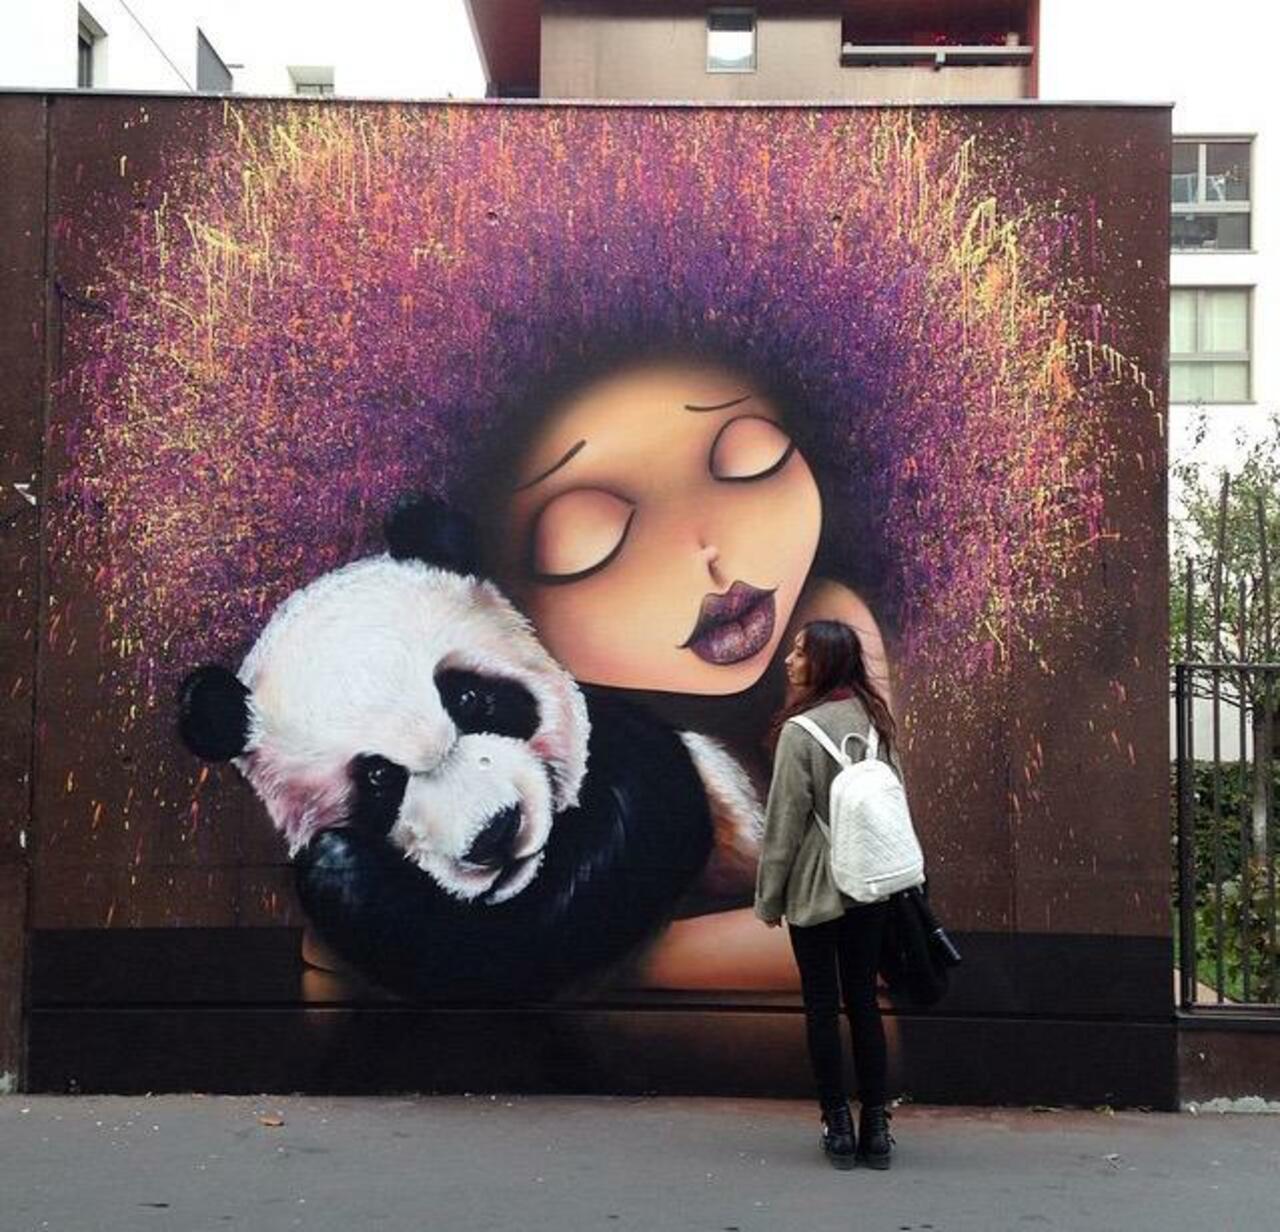 Street Art by VinieGraffiti in Paris 

#art #graffiti #mural #streetart http://t.co/krKejZGFKC